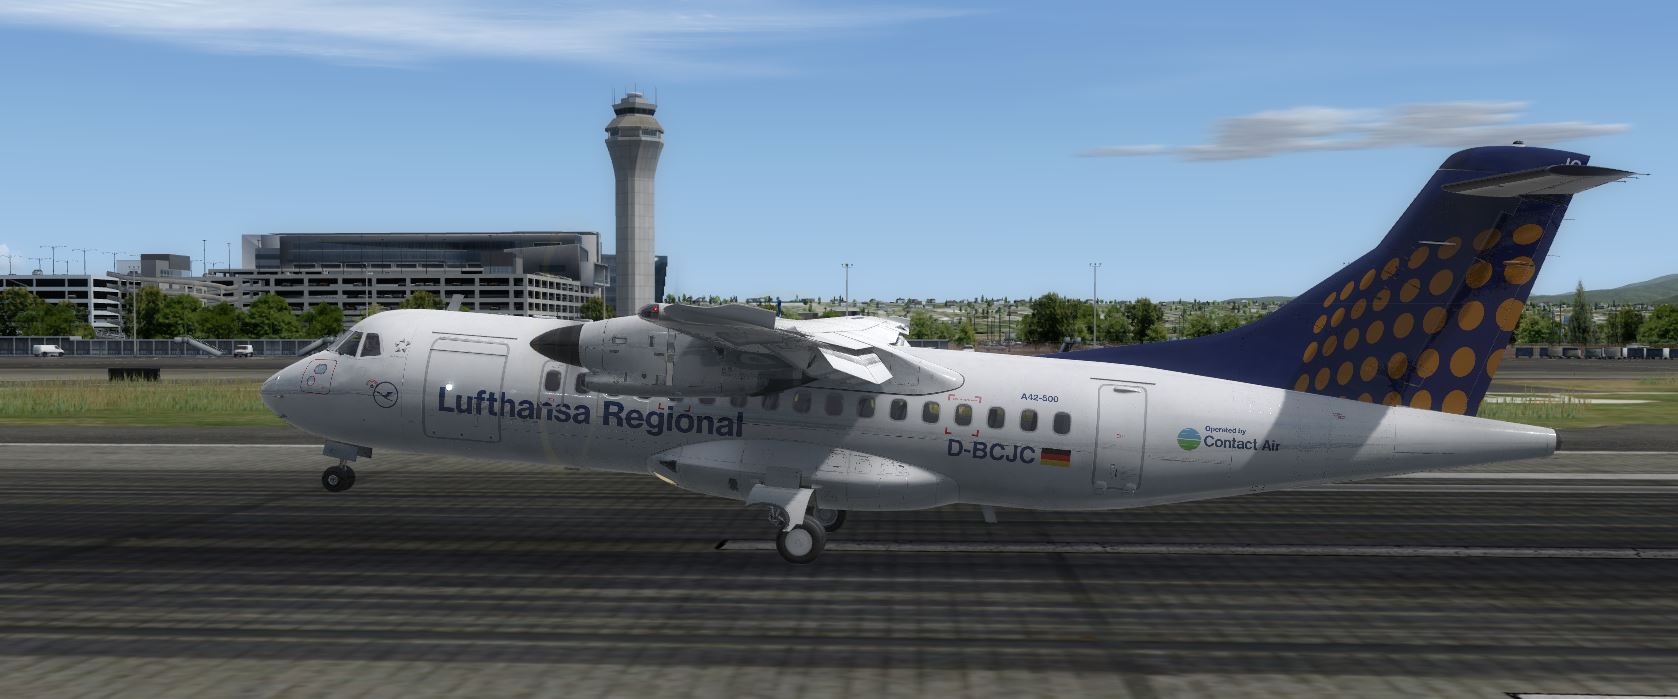 ATR42-500 Lufthansa-2610 